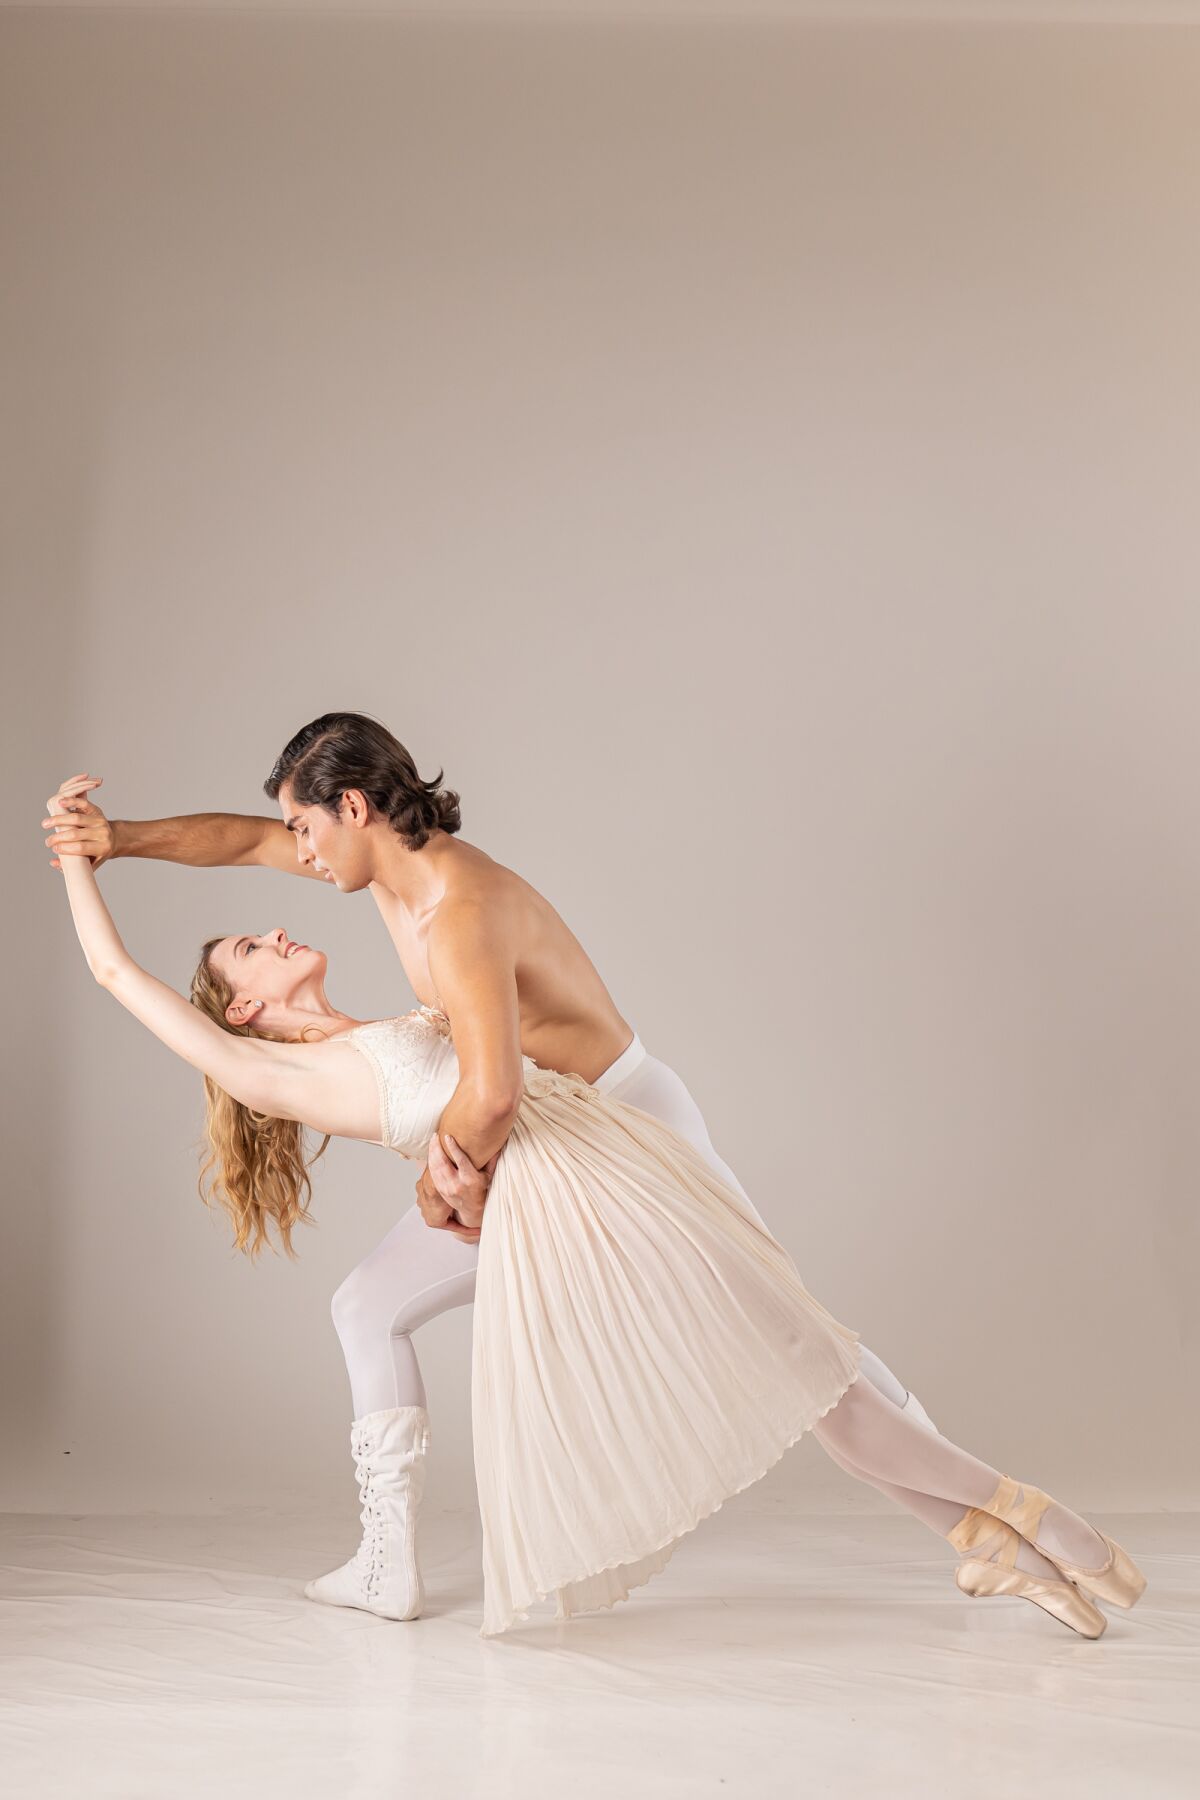 Tonatiuh Gomez and Stephanie Maiorano in San Diego Ballet's "Romeo et Juliet."